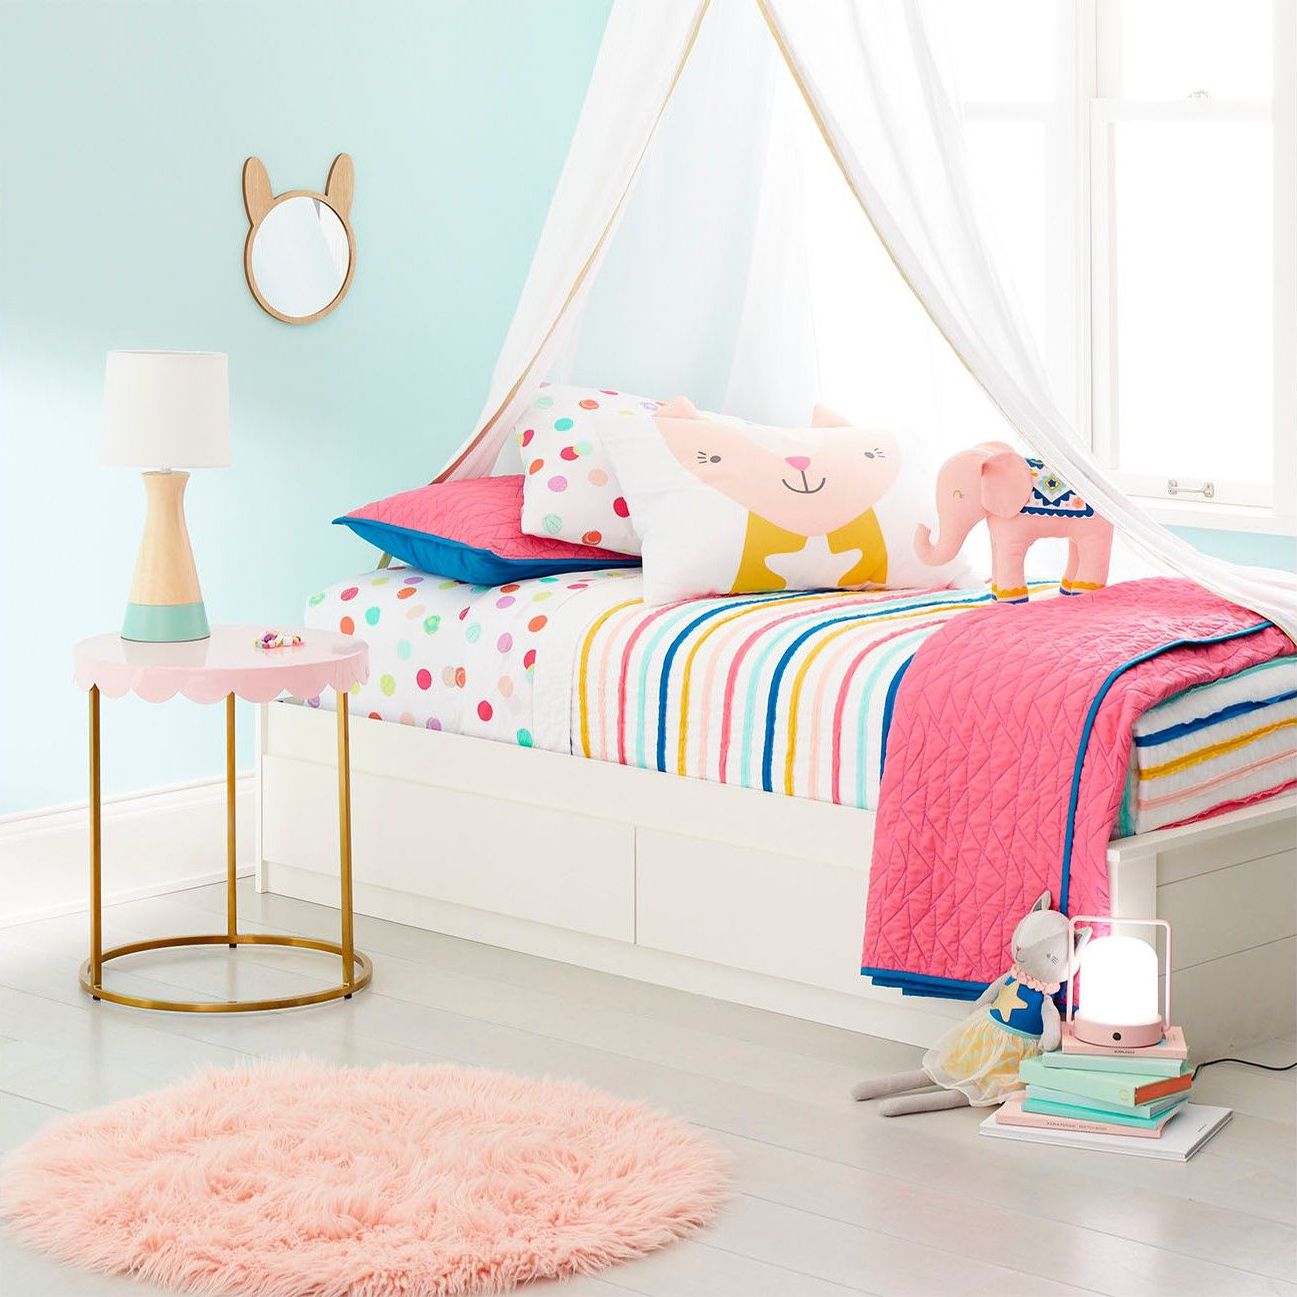 beautiful colorful bedding